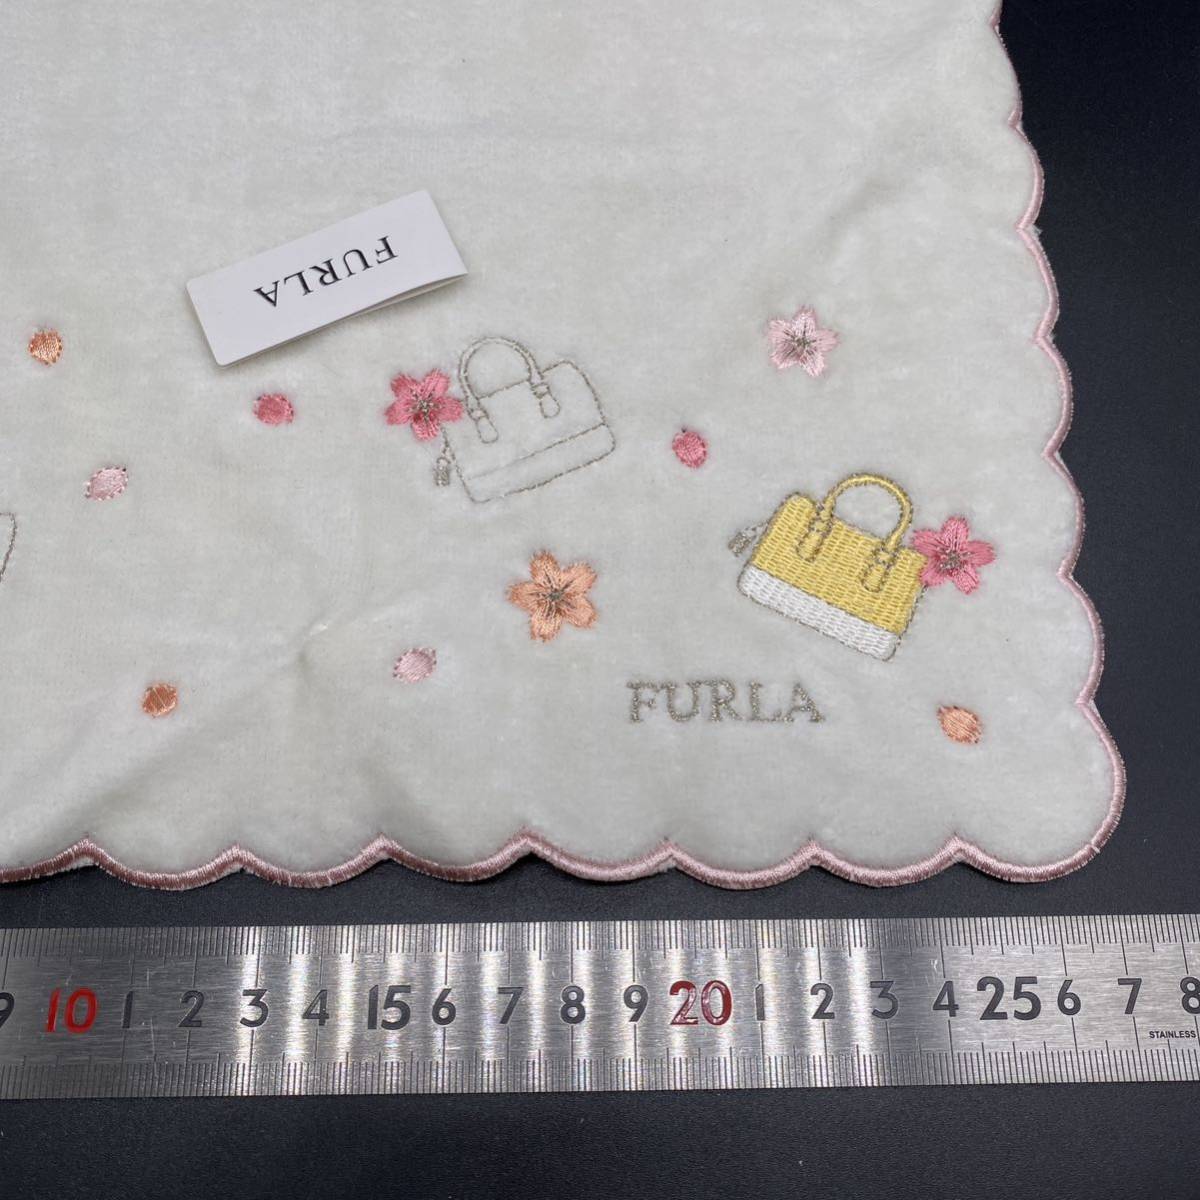 FURLA Furla towel handkerchie eggshell white bag embroidery brink pink no.31